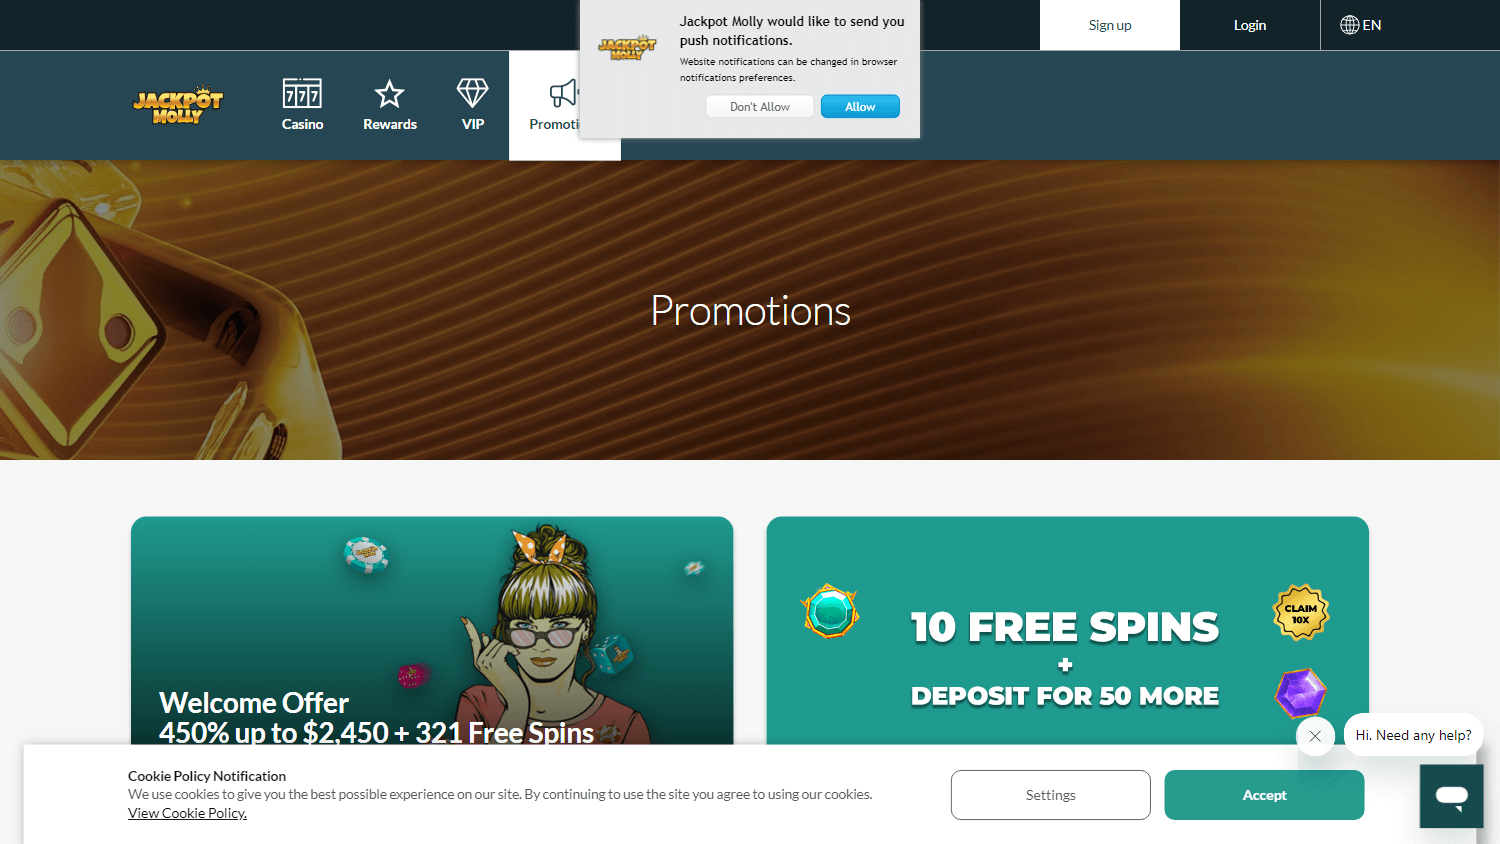 jackpot_molly_casino_promotions_desktop